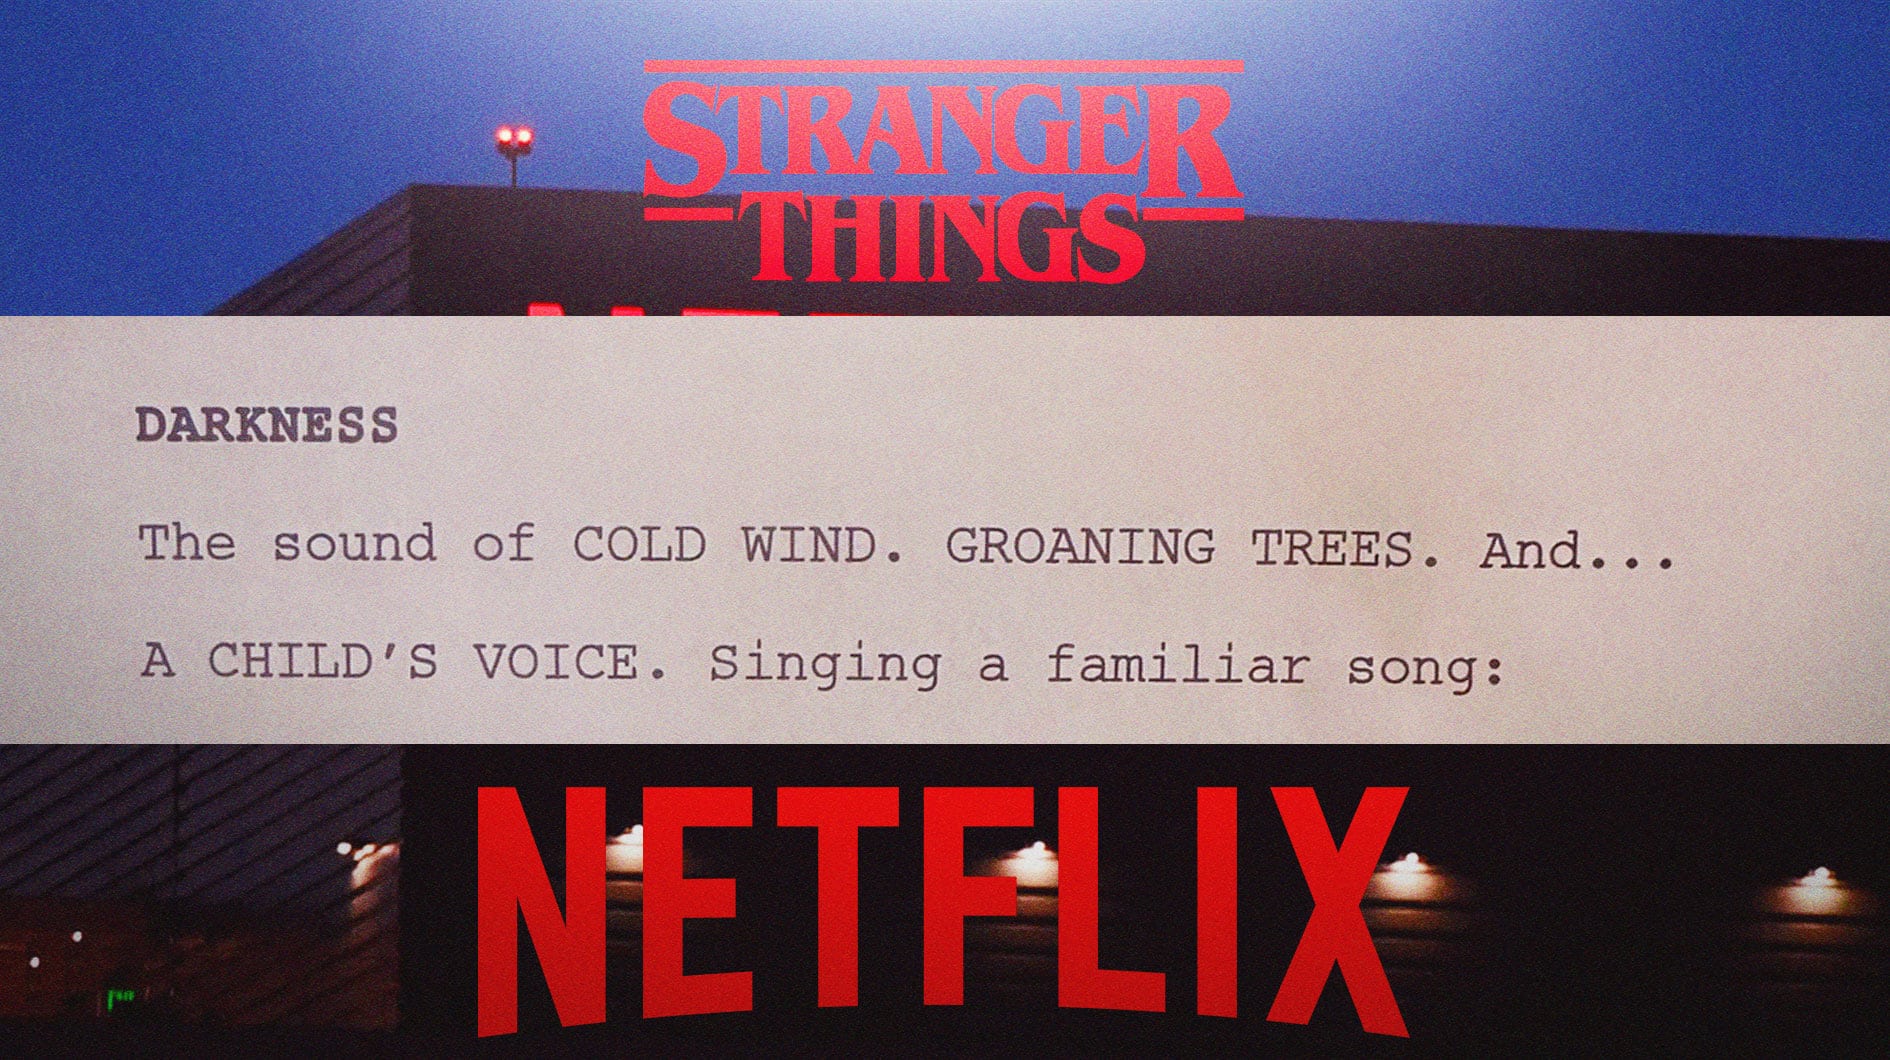 Stranger Things' writers reveal opening scene of Season 5